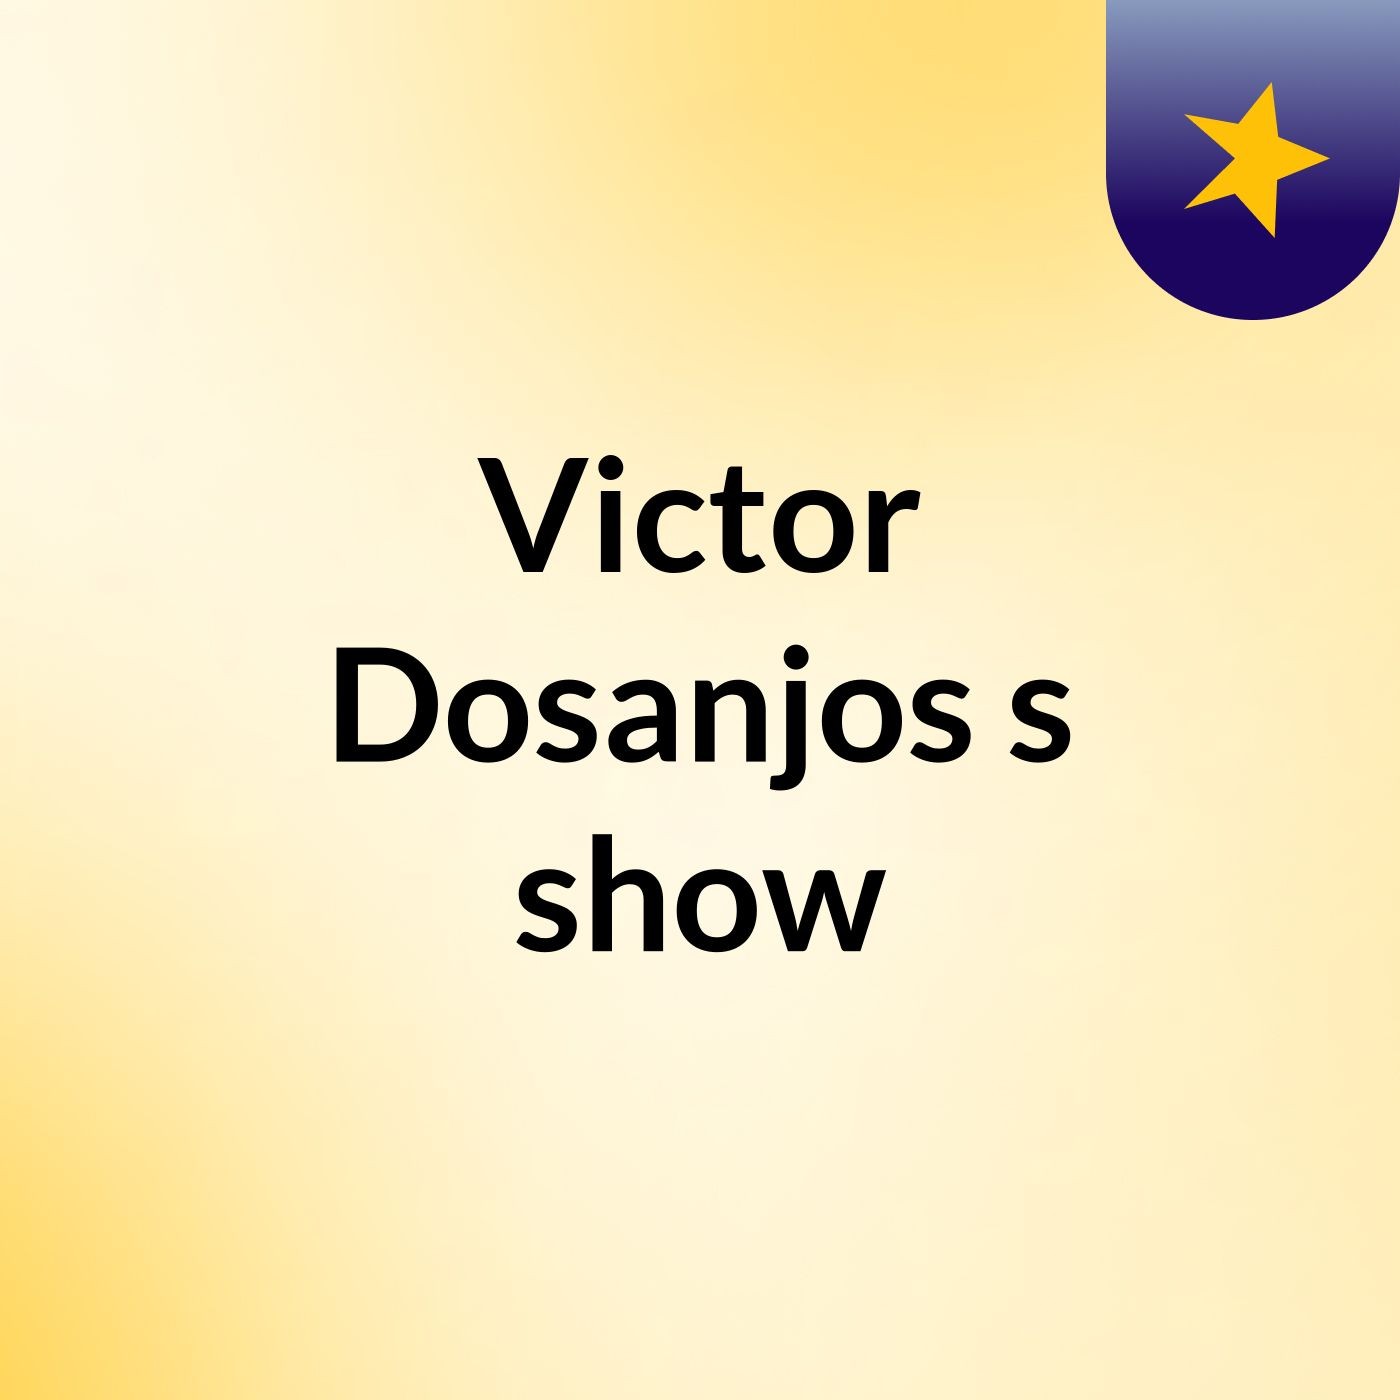 Victor Dosanjos's show